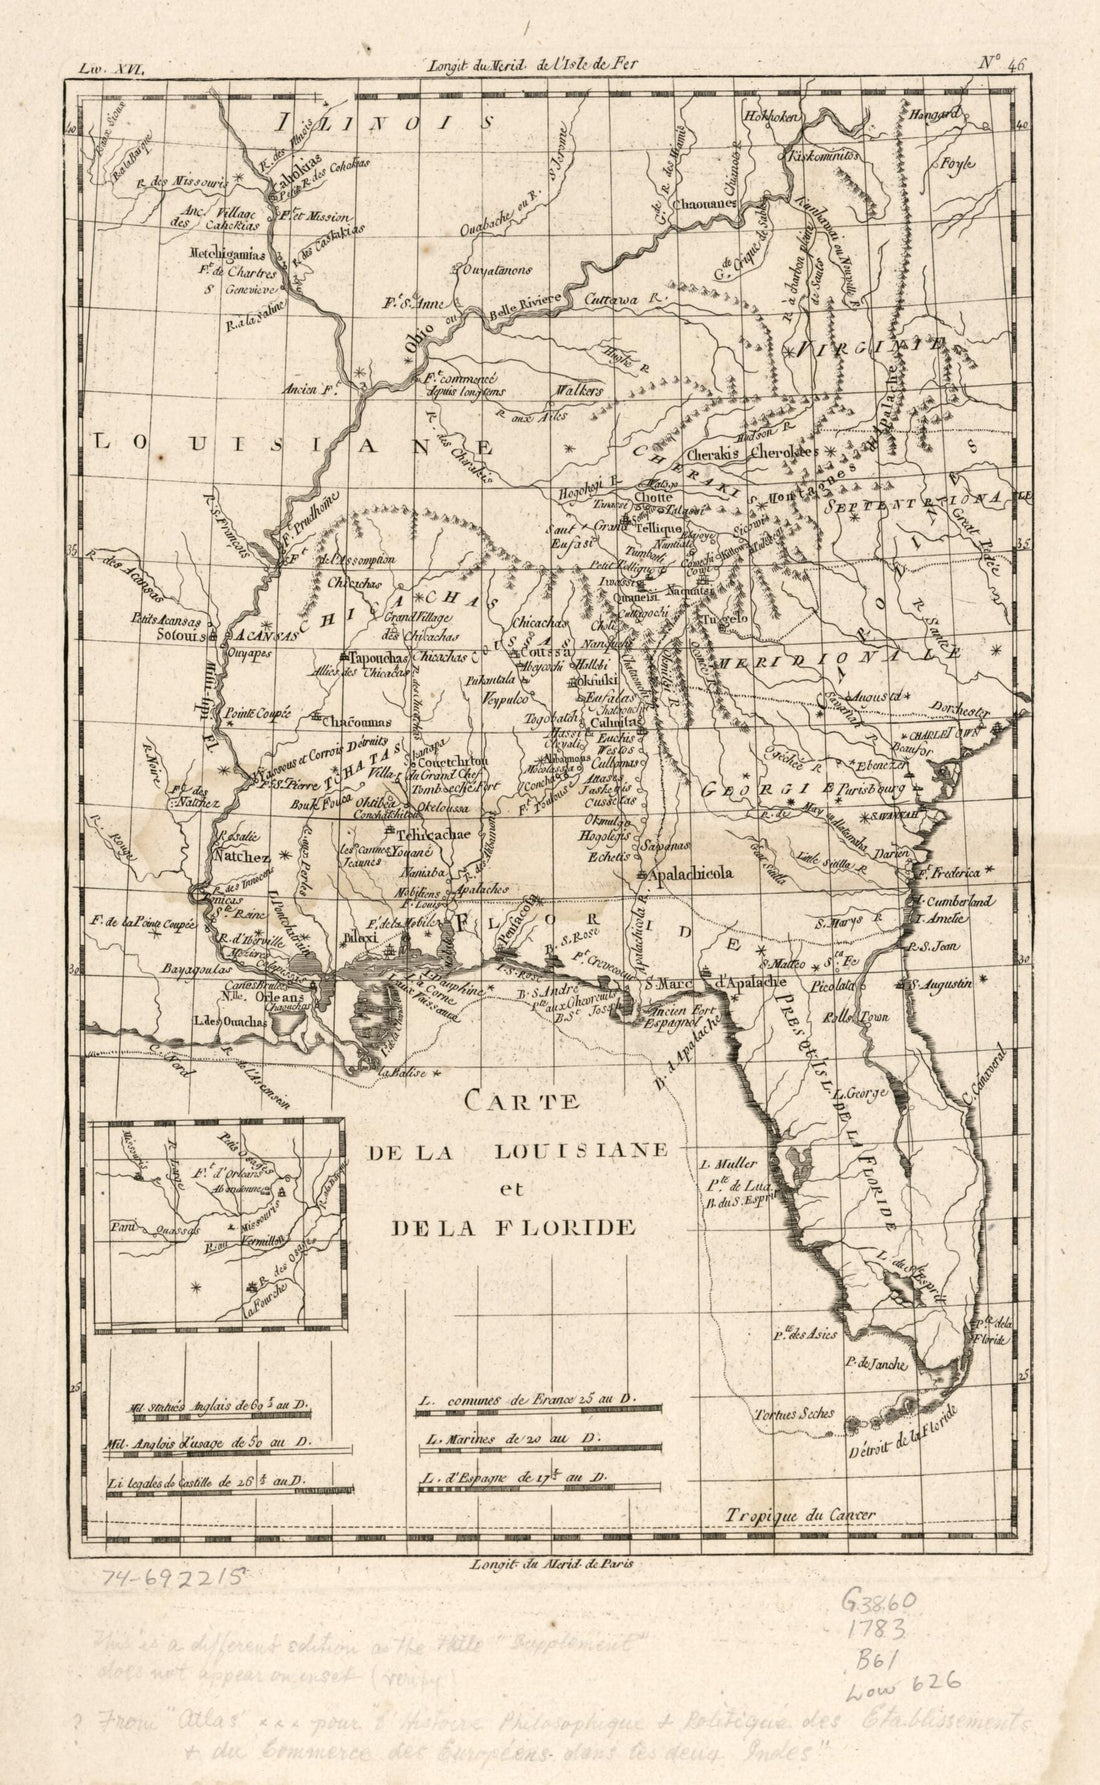 This old map of Carte De La Louisiane Et De La Floride from 1783 was created by Rigobert Bonne in 1783